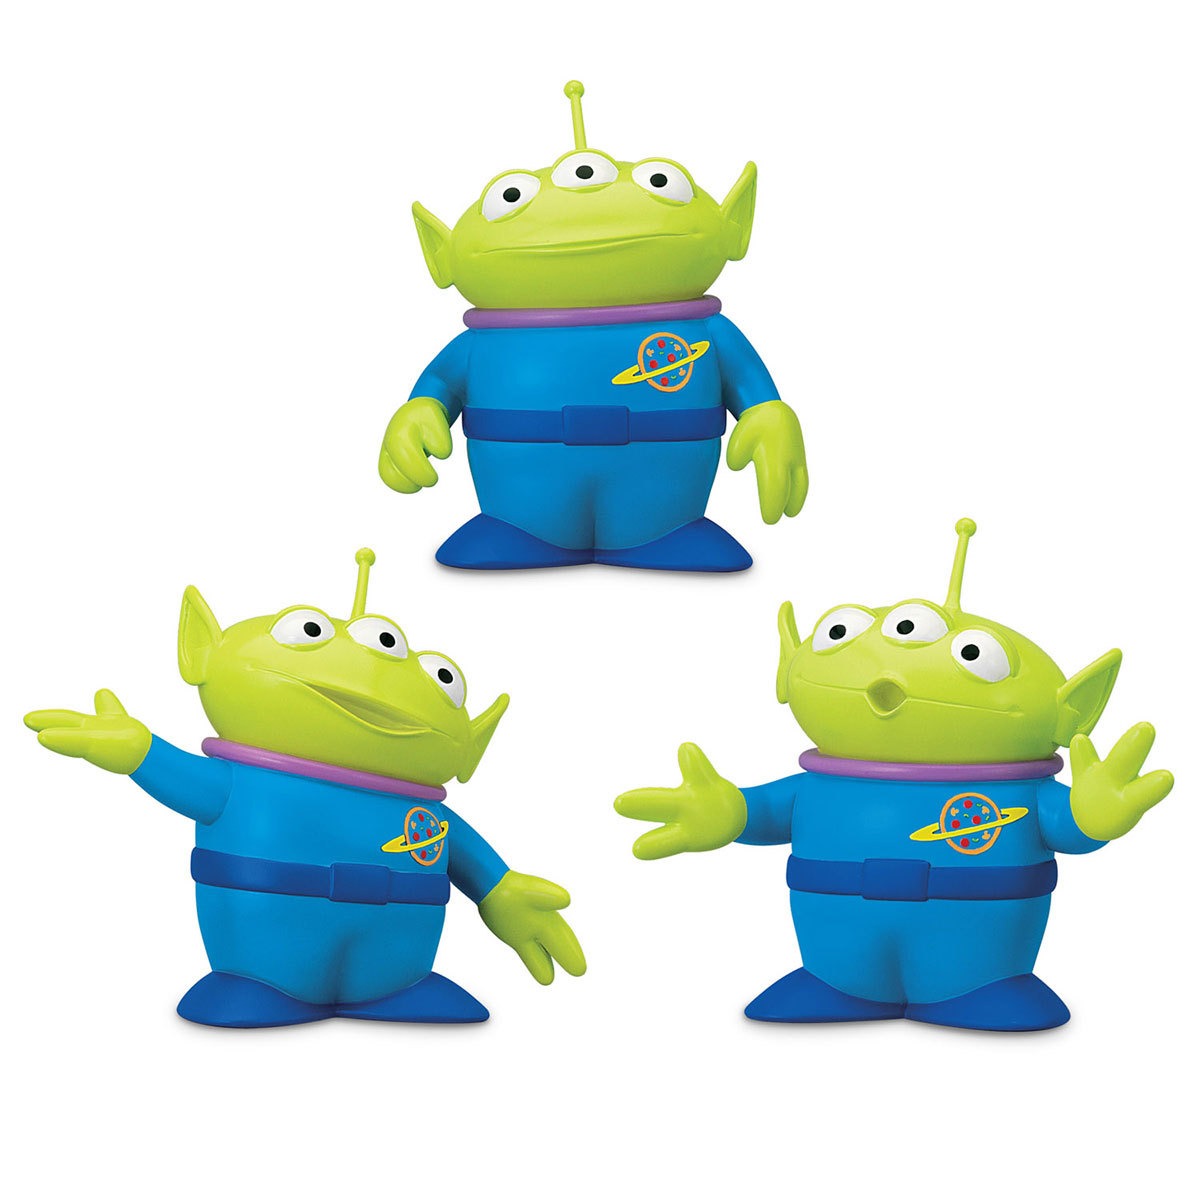 Disney/Pixar's BULLYLAND 12765 Alien Toy Story figure